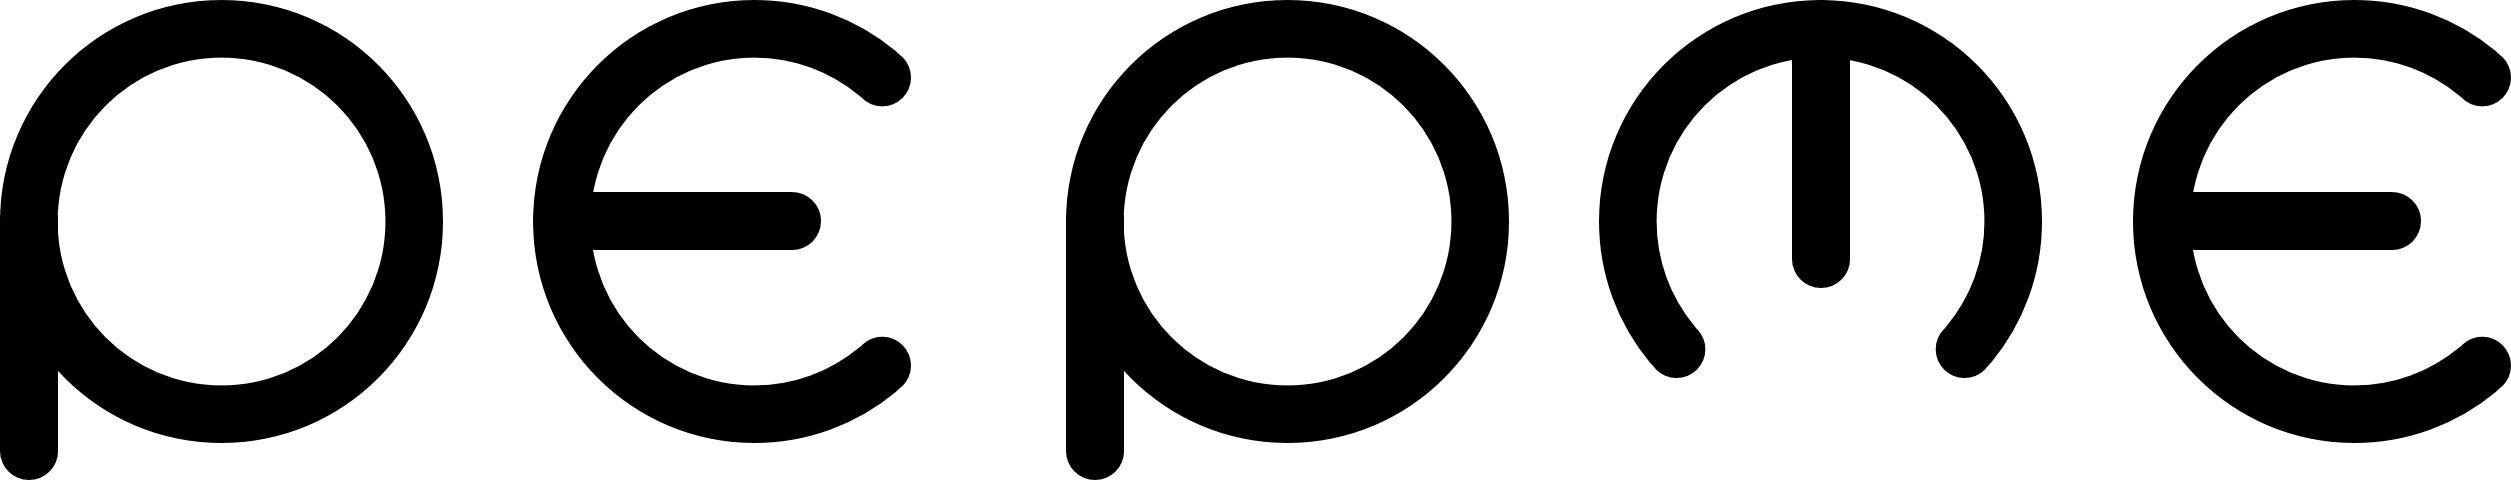 pepme logo transparent png